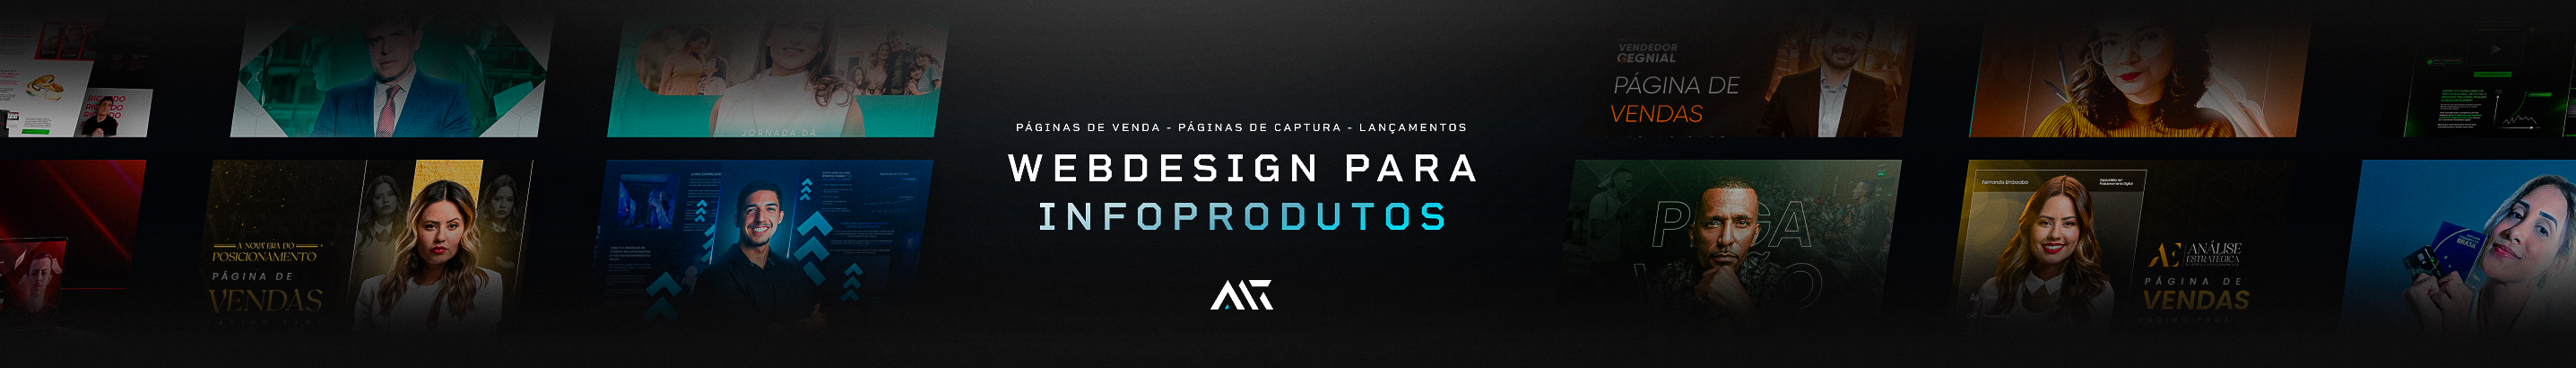 Mateus Amorim's profile banner